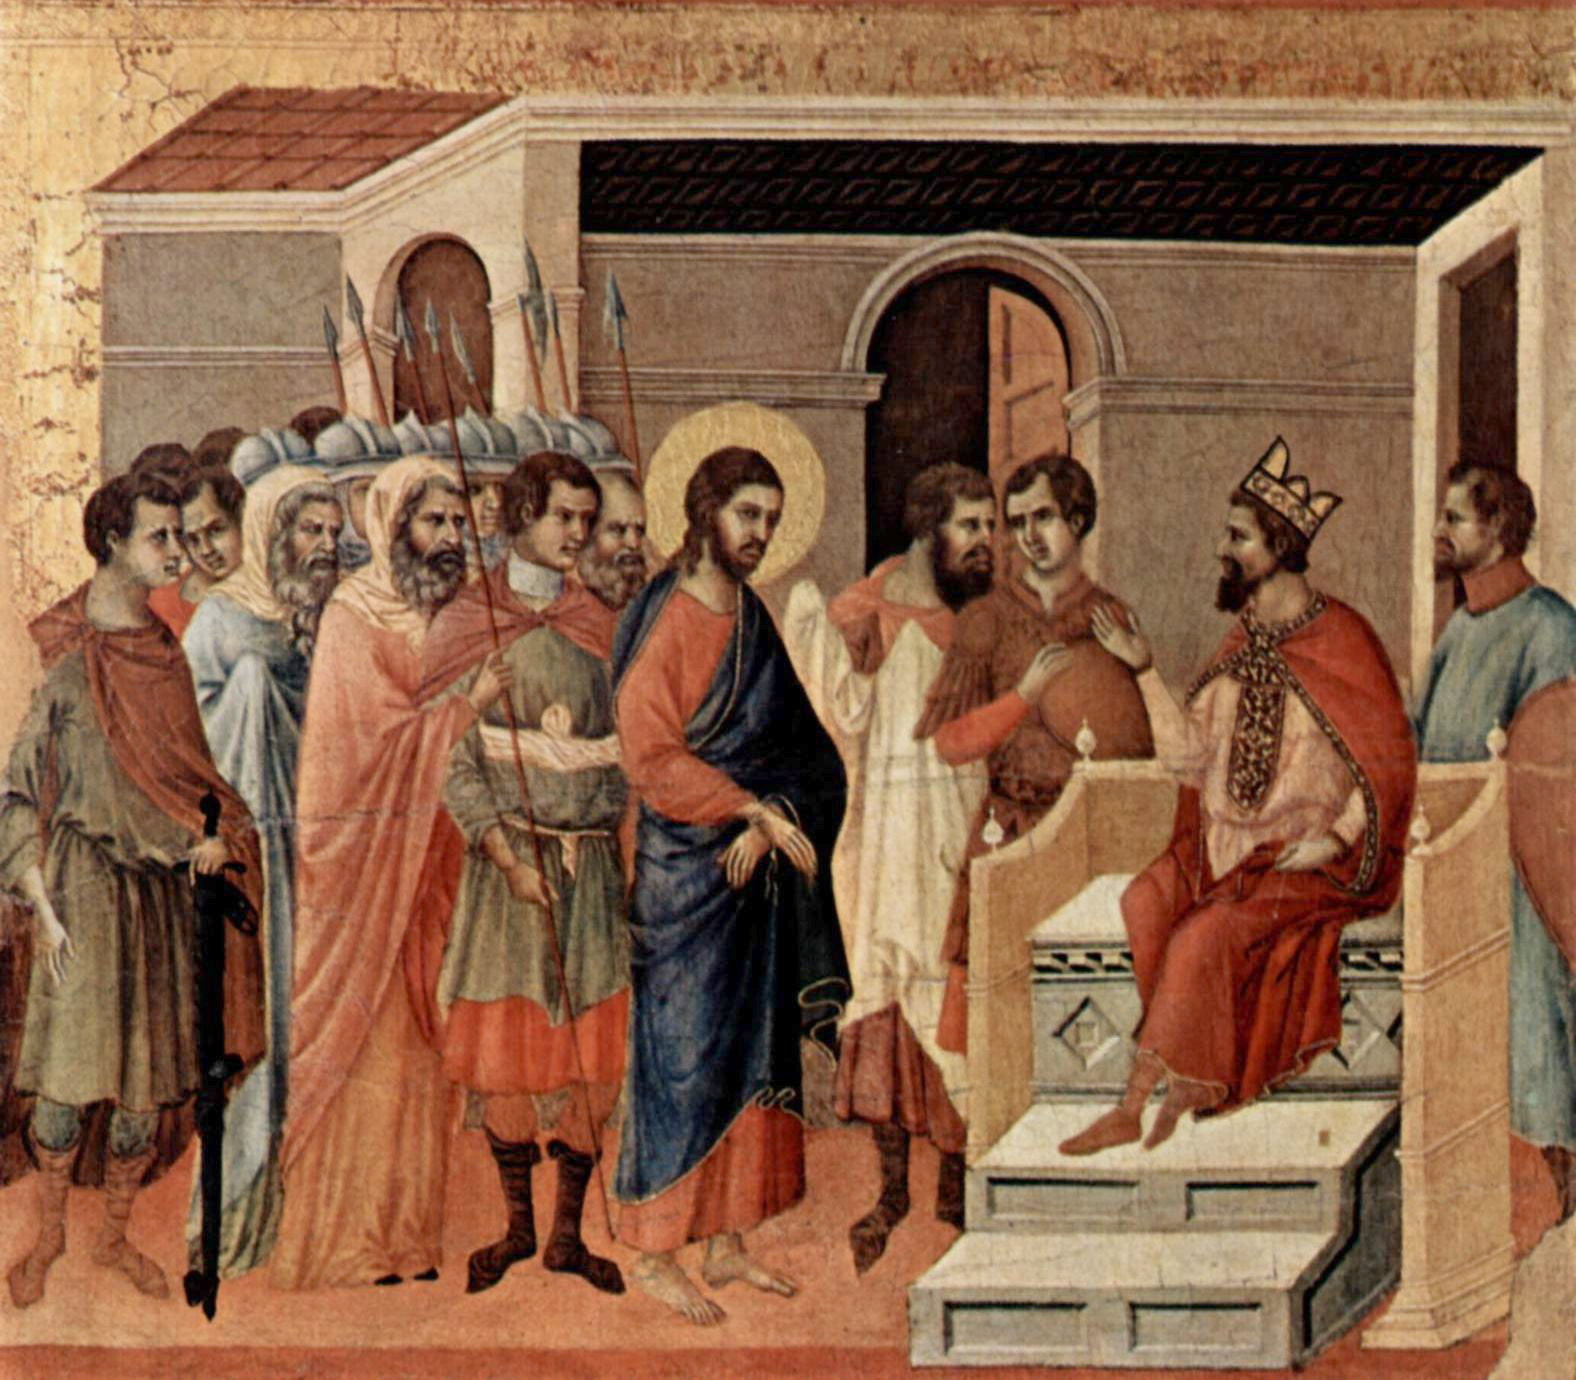 Jesus at Herod's Court, by Duccio, c. 1310